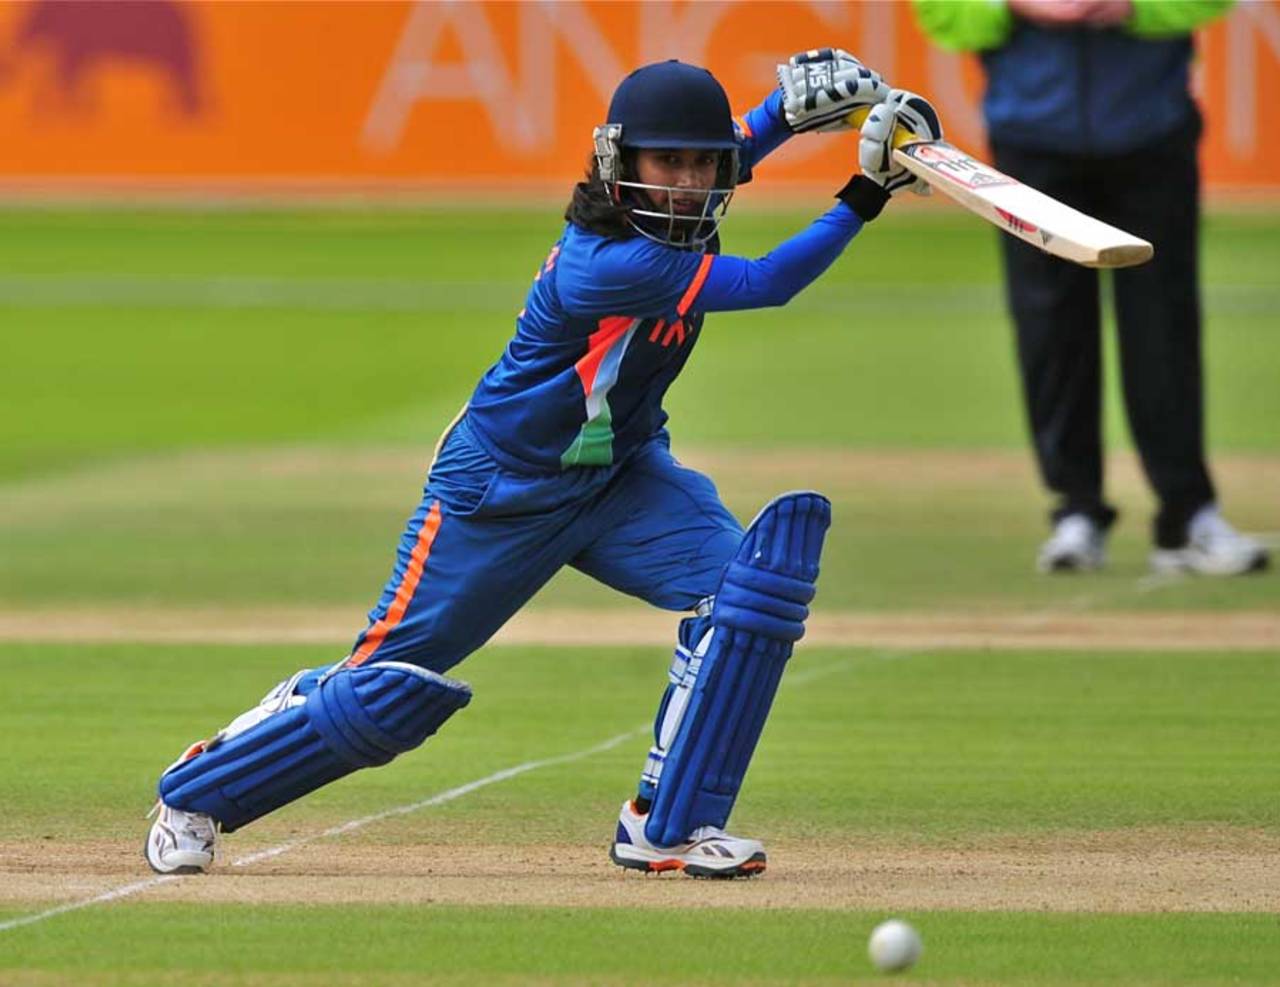 Mithali Raj scored an unbeaten century in her last innings, in February 2013&nbsp;&nbsp;&bull;&nbsp;&nbsp;Bipin Patel